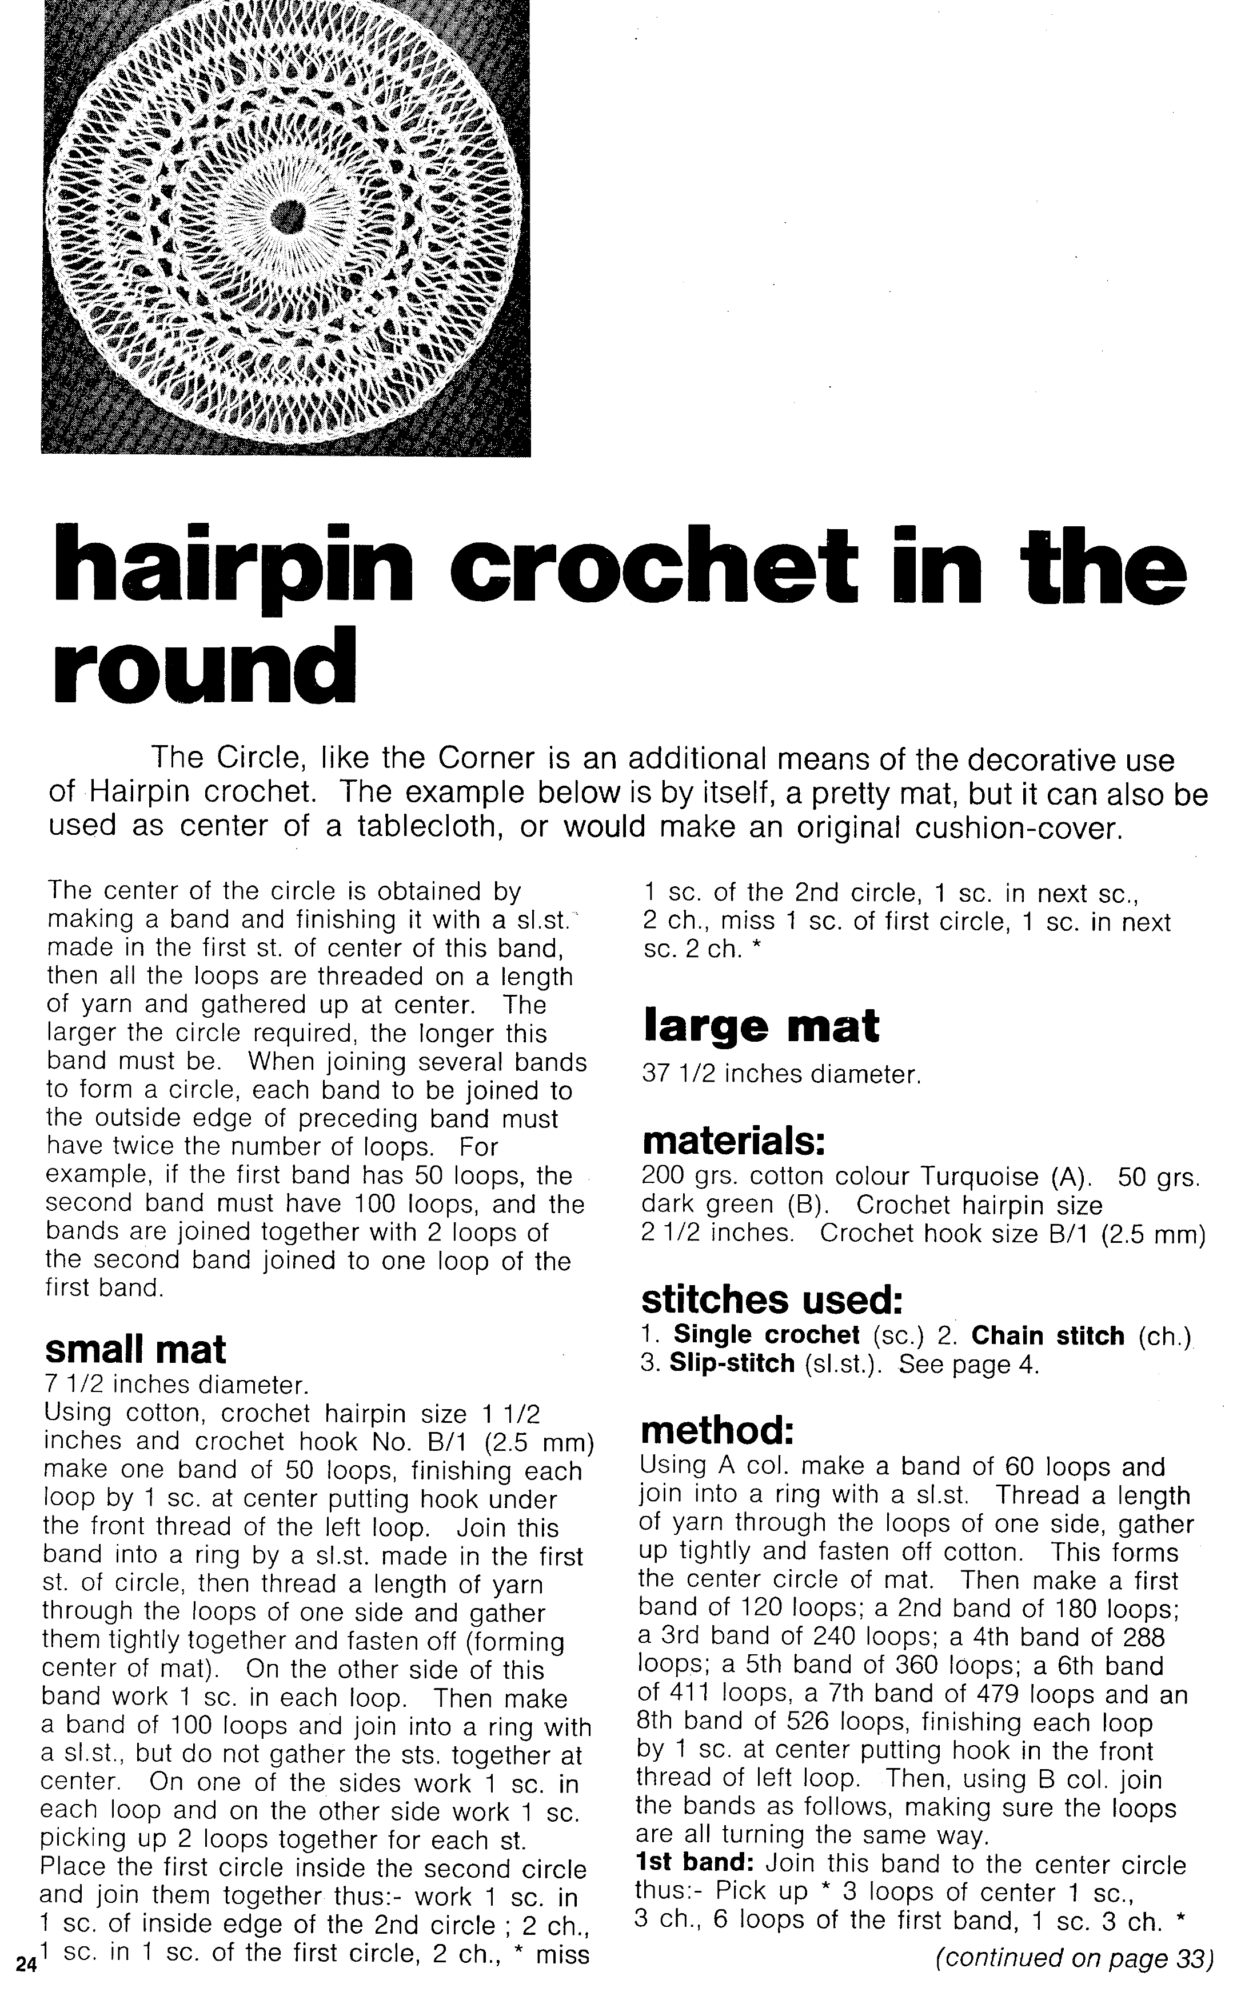 hairpin crochet rounds